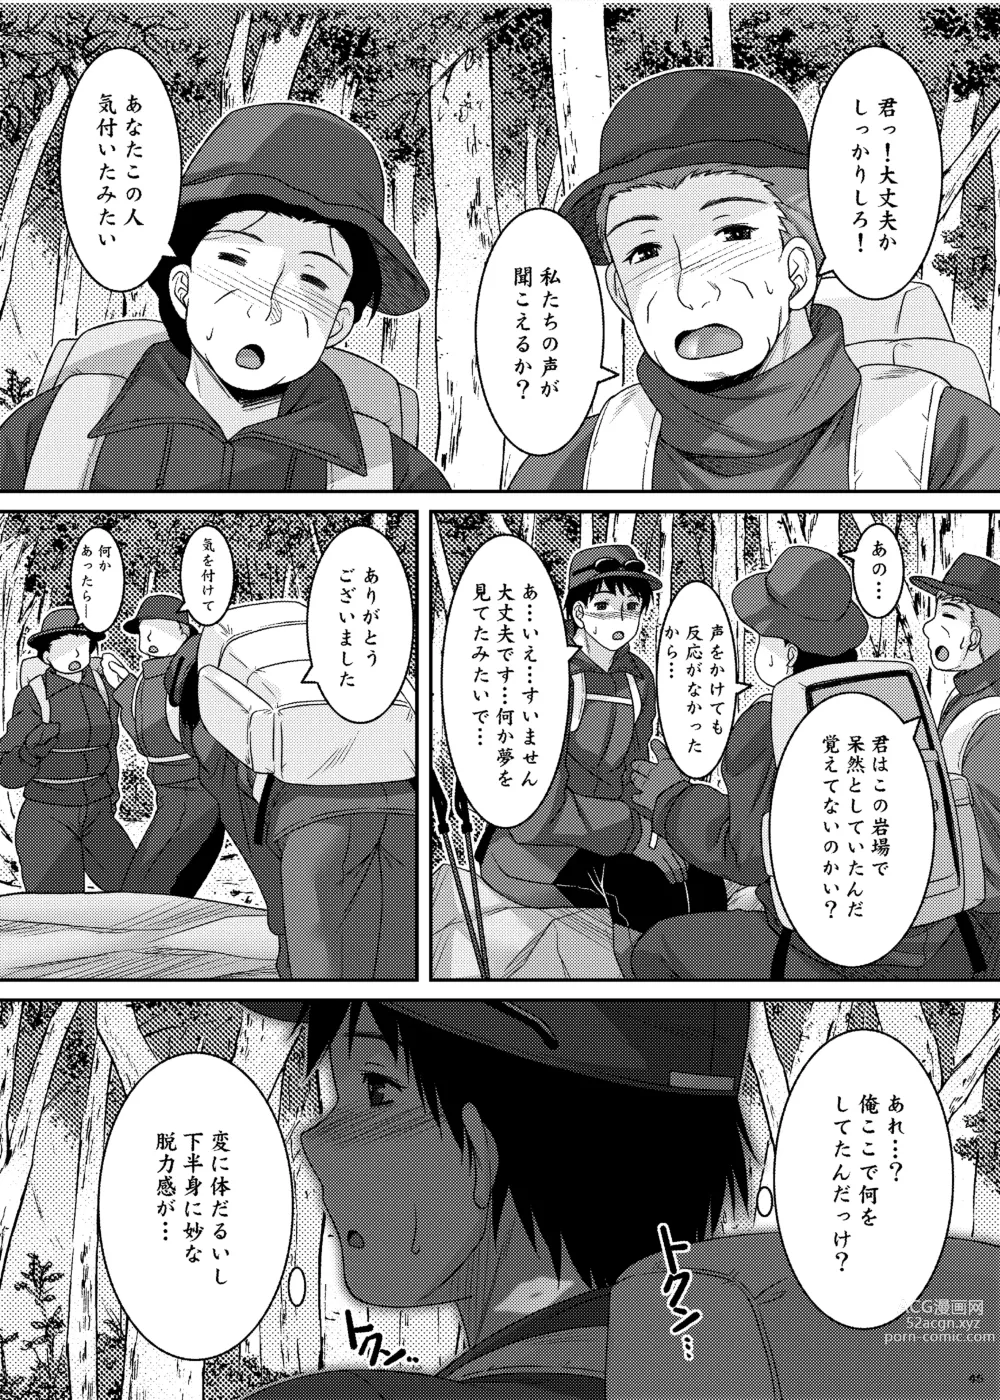 Page 47 of doujinshi Tsukuyomi